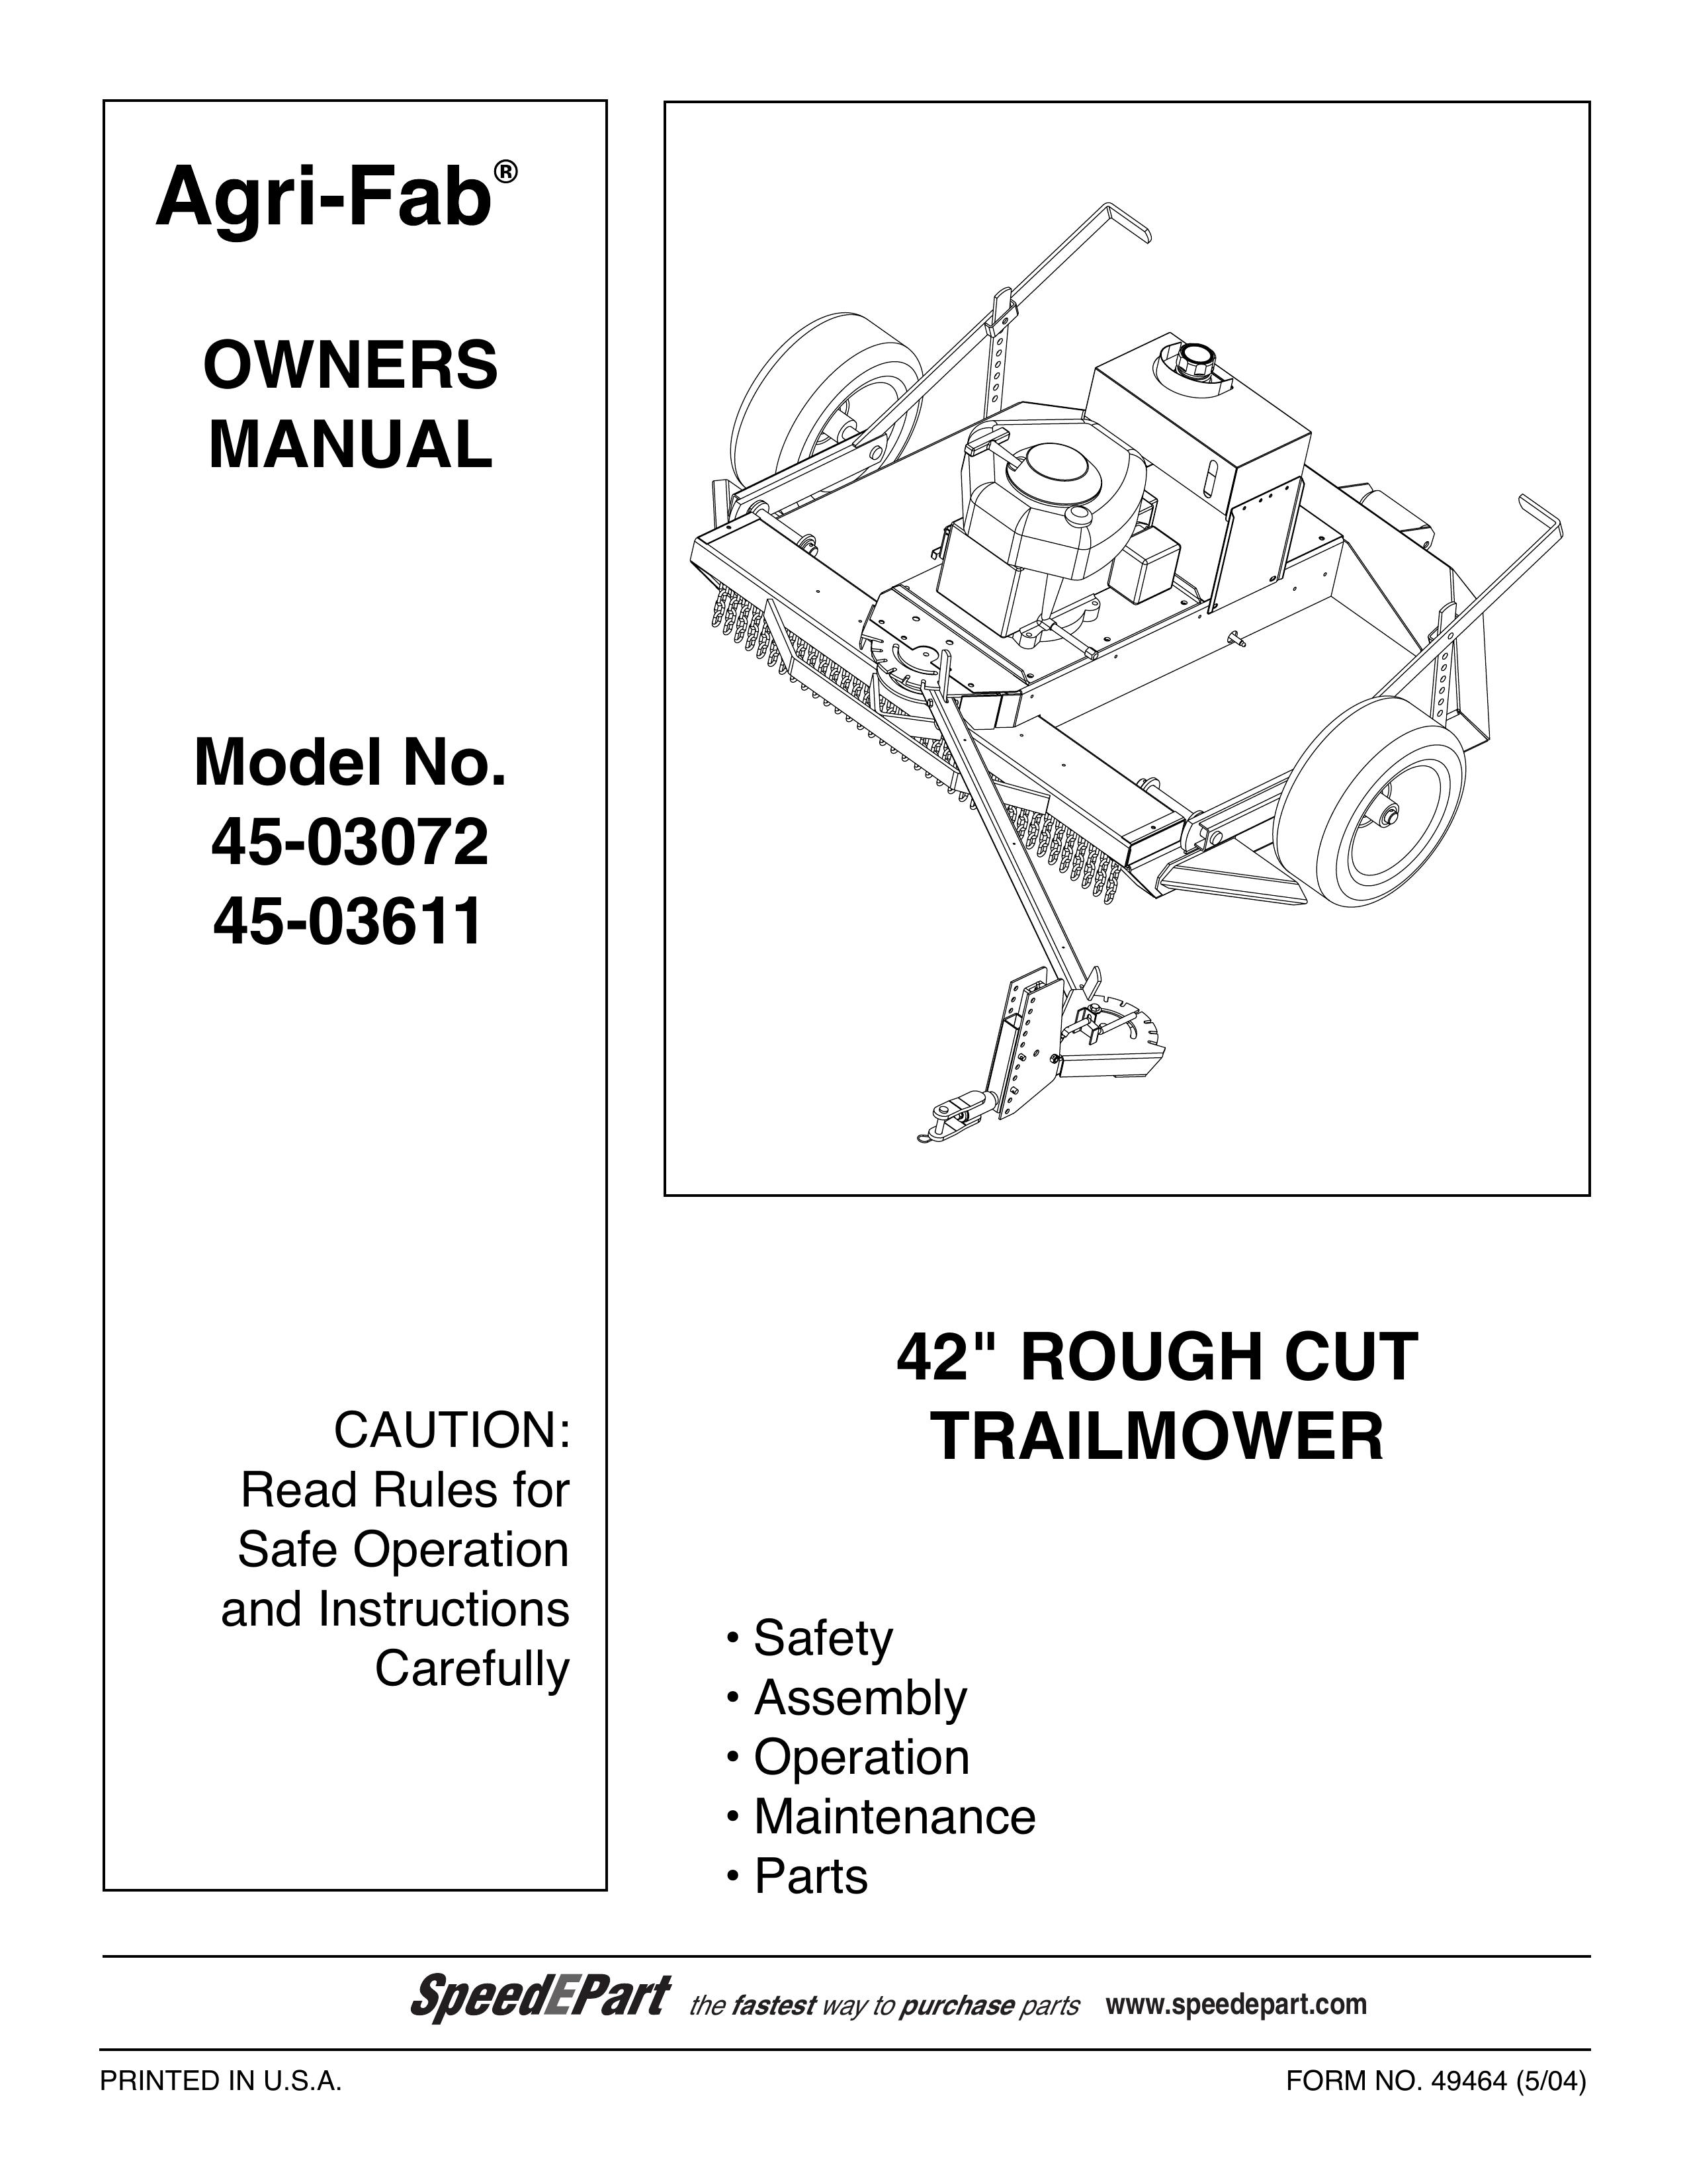 Agri-Fab 45-03072 Lawn Mower User Manual